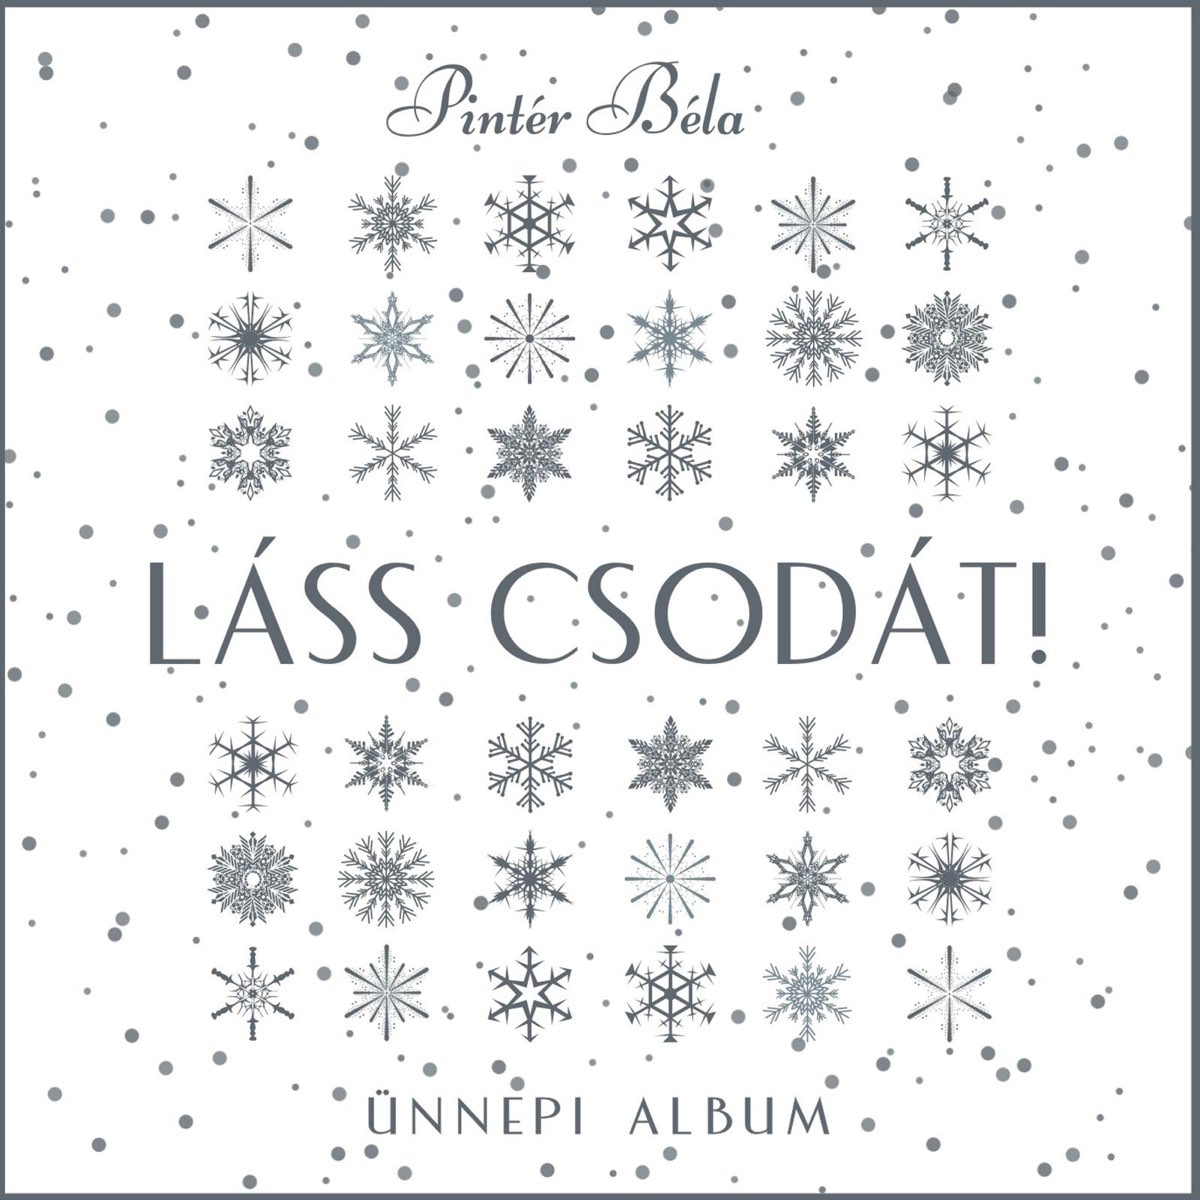 Láss Csodát (Ünnepi Album) by Pintér Béla on Apple Music